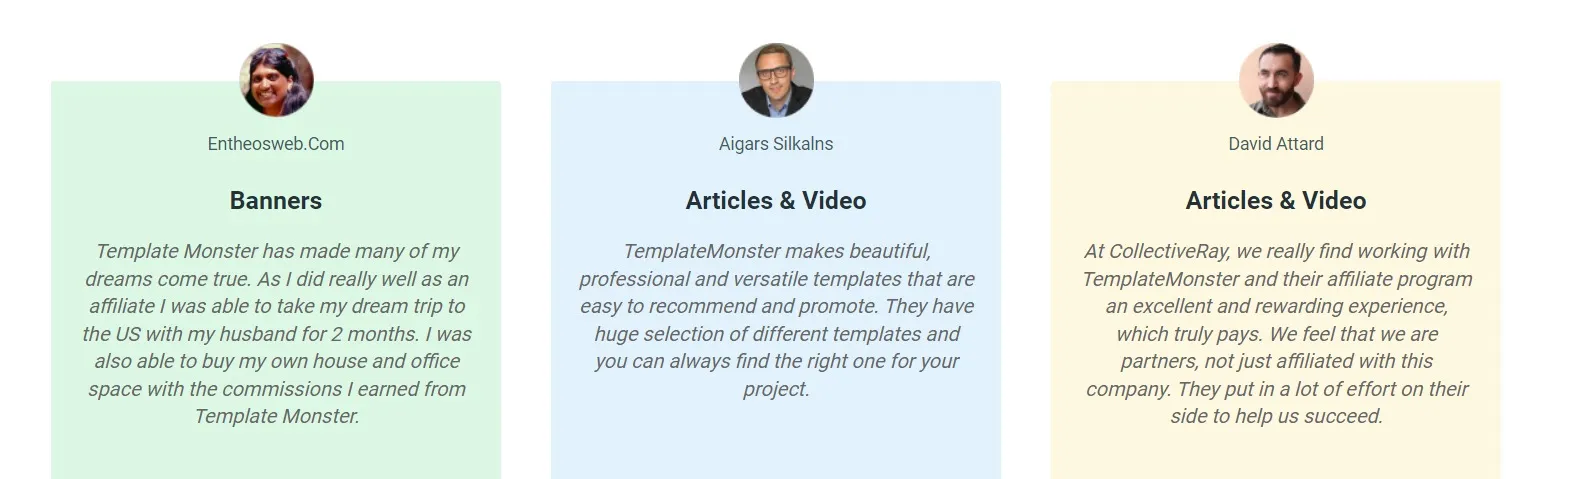 TemplateMonster Affiliates’ Success Stories